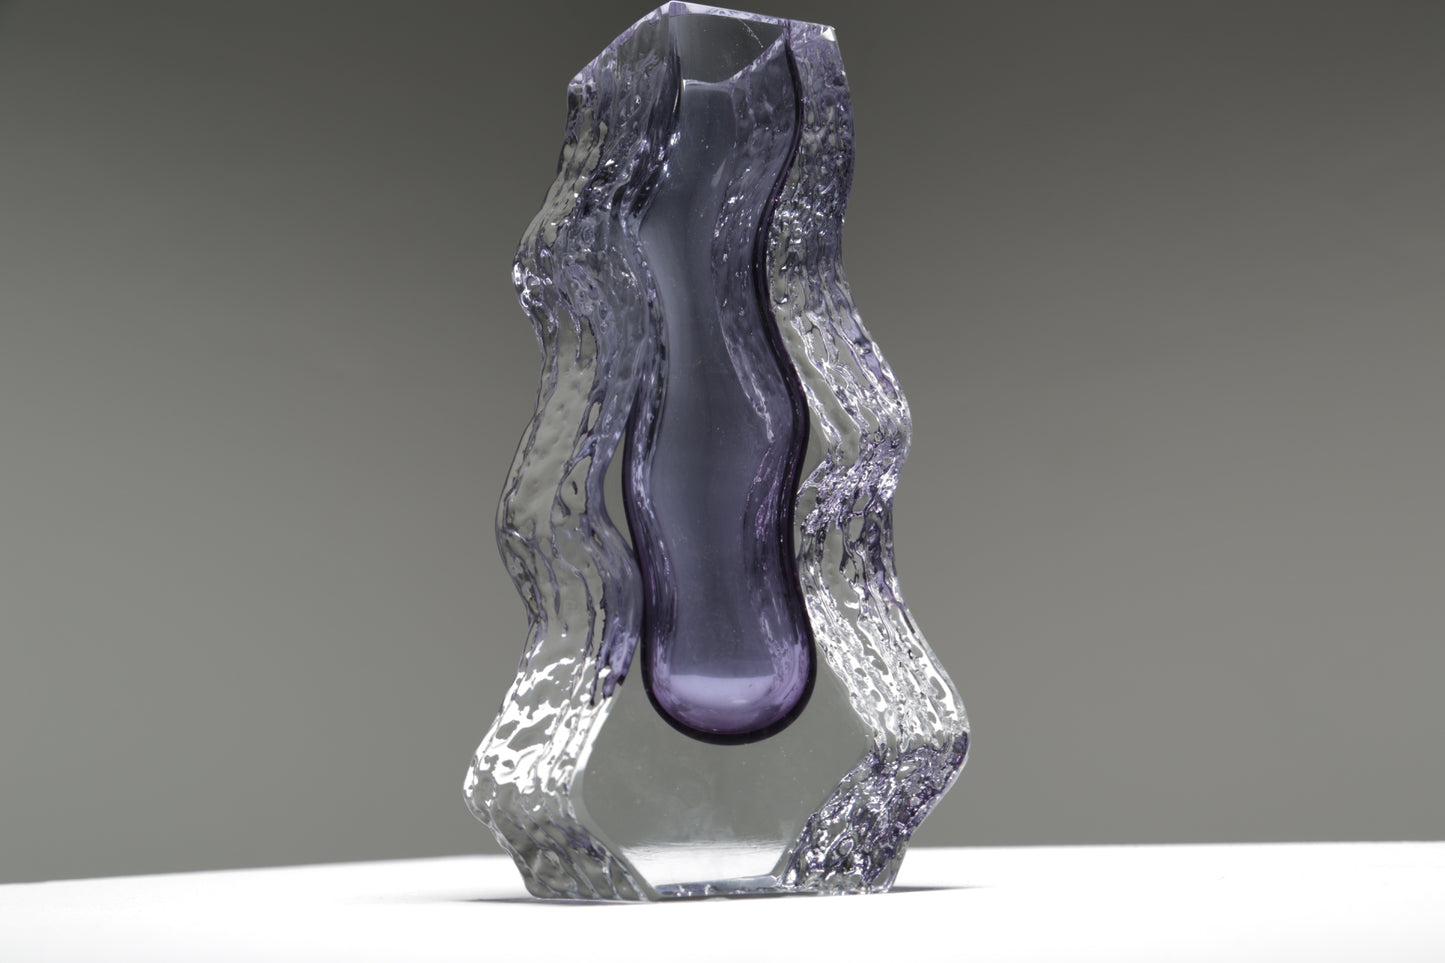 Gianfranco Mandruzzato wavy purple vase glass